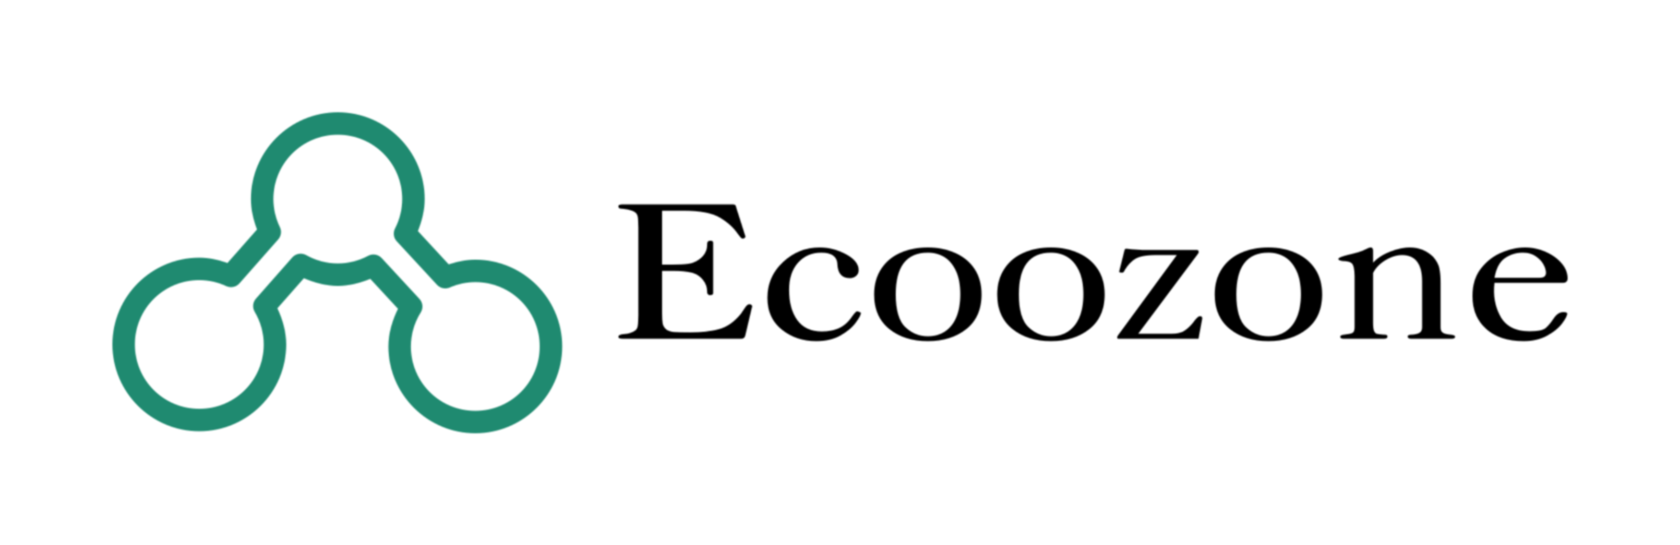 Ecoozone